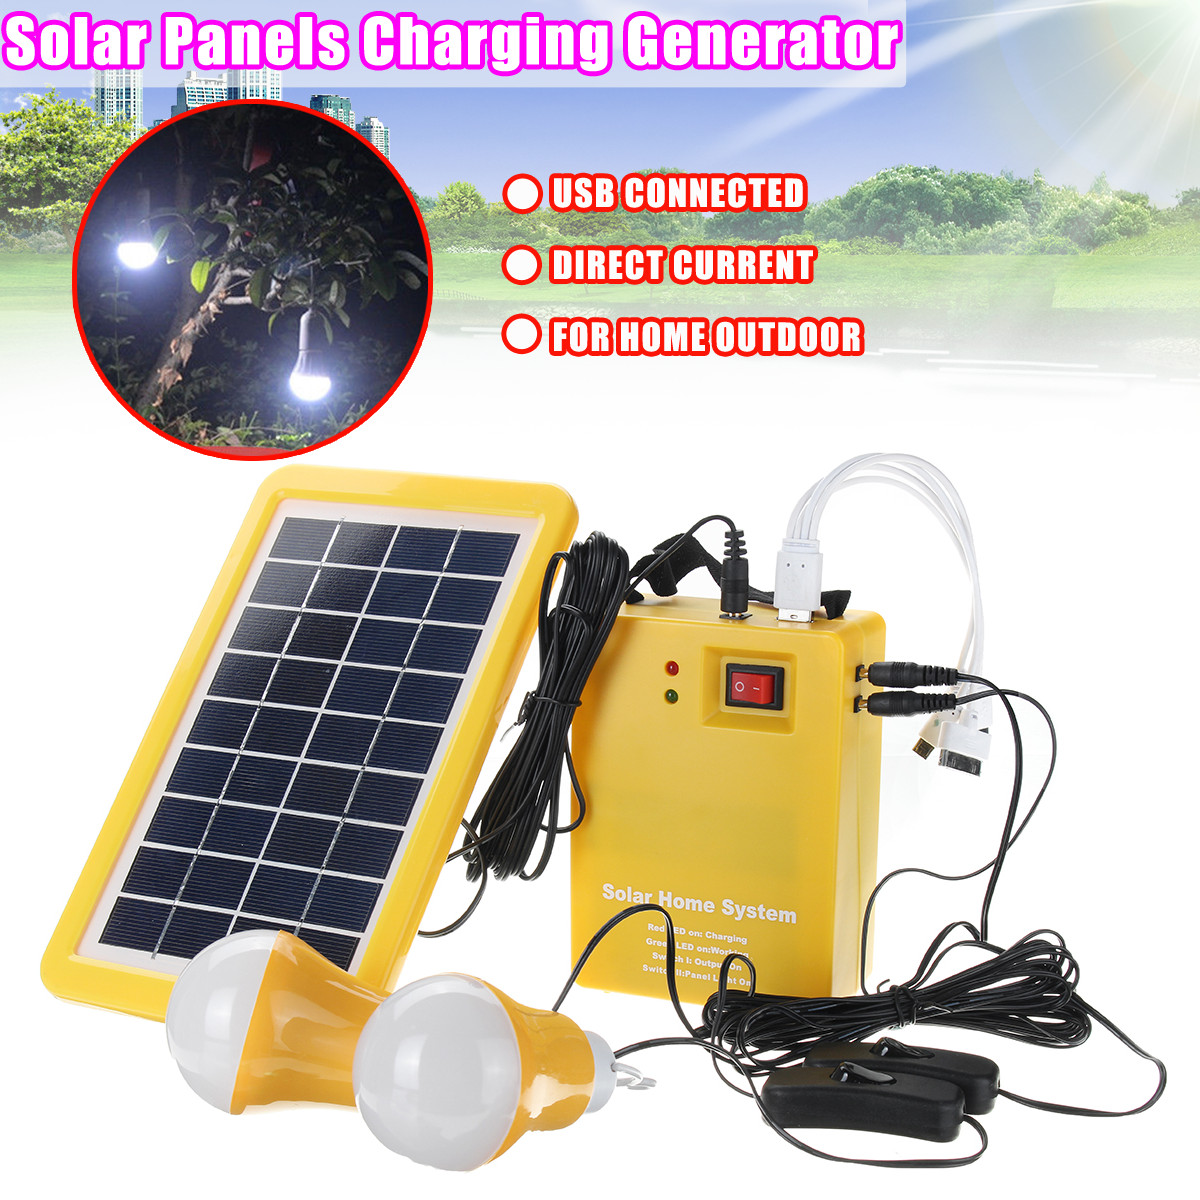 Electric generator solar panel